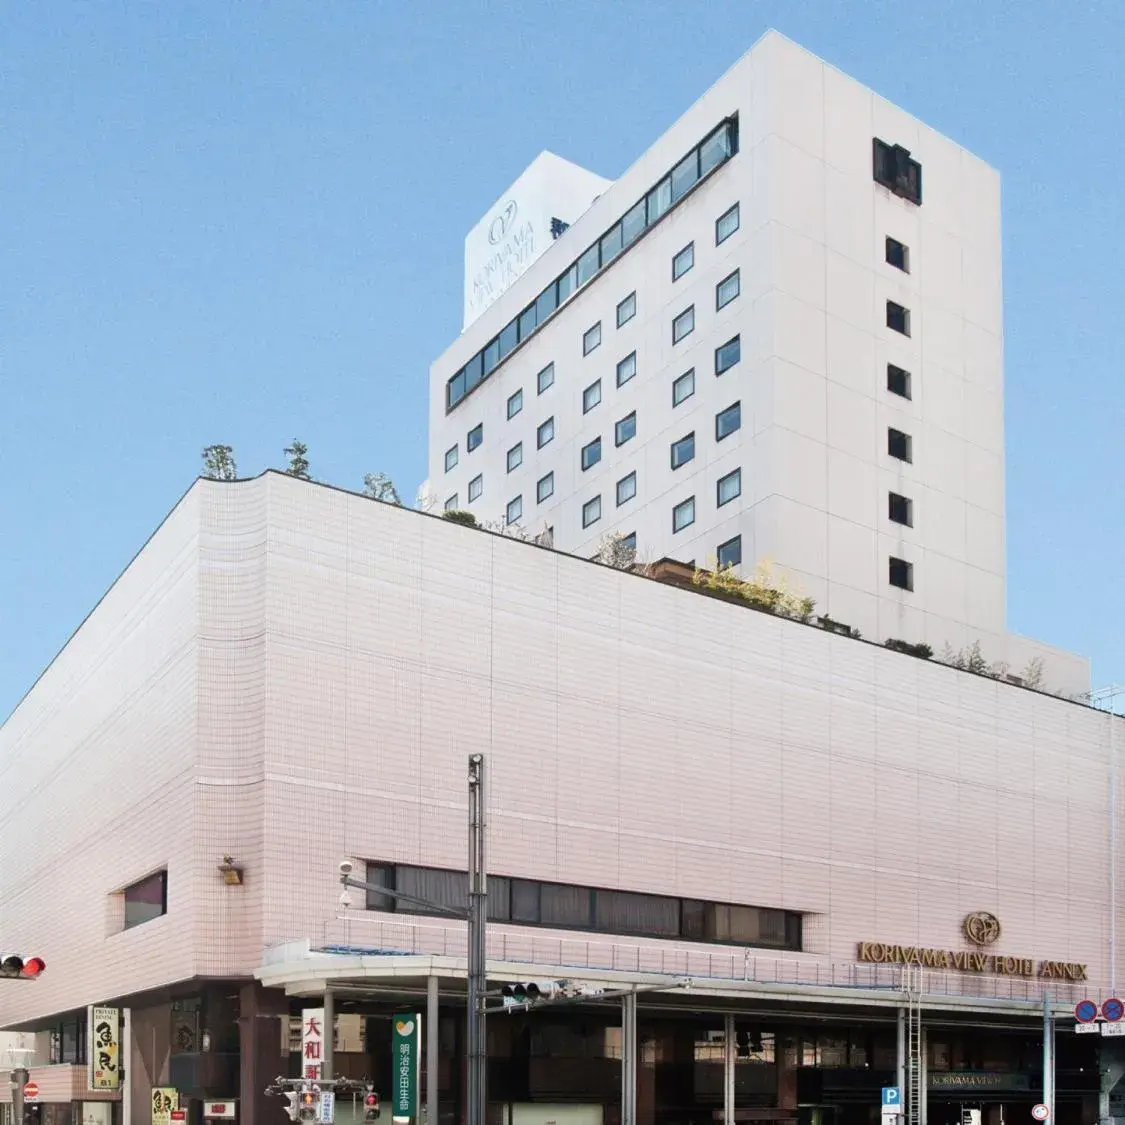 Property Building in Koriyama View Hotel Annex